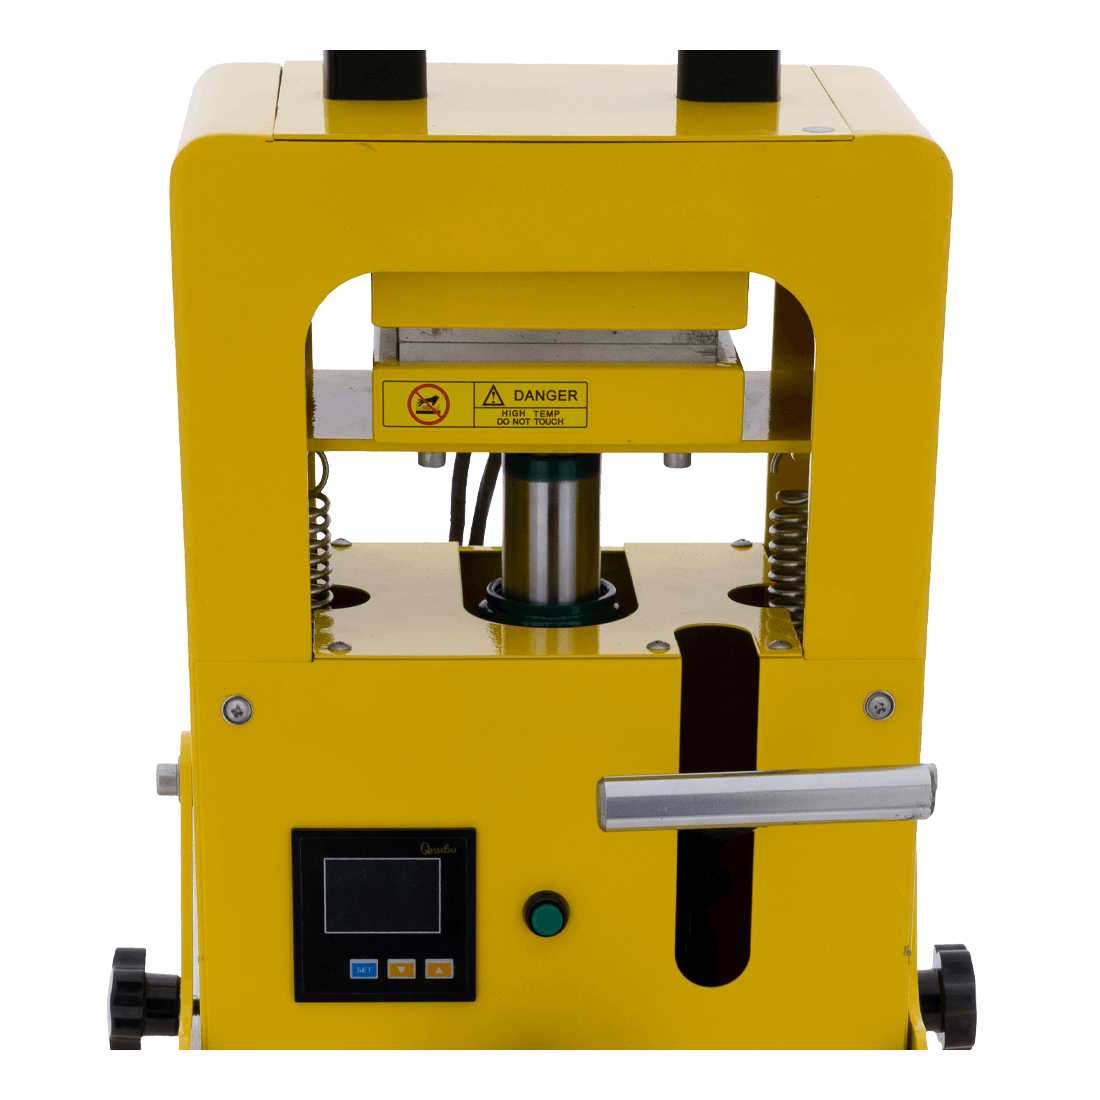 Qnubu Press Pro-Rot prensa hidráulica para extracción Rosin 10Tn